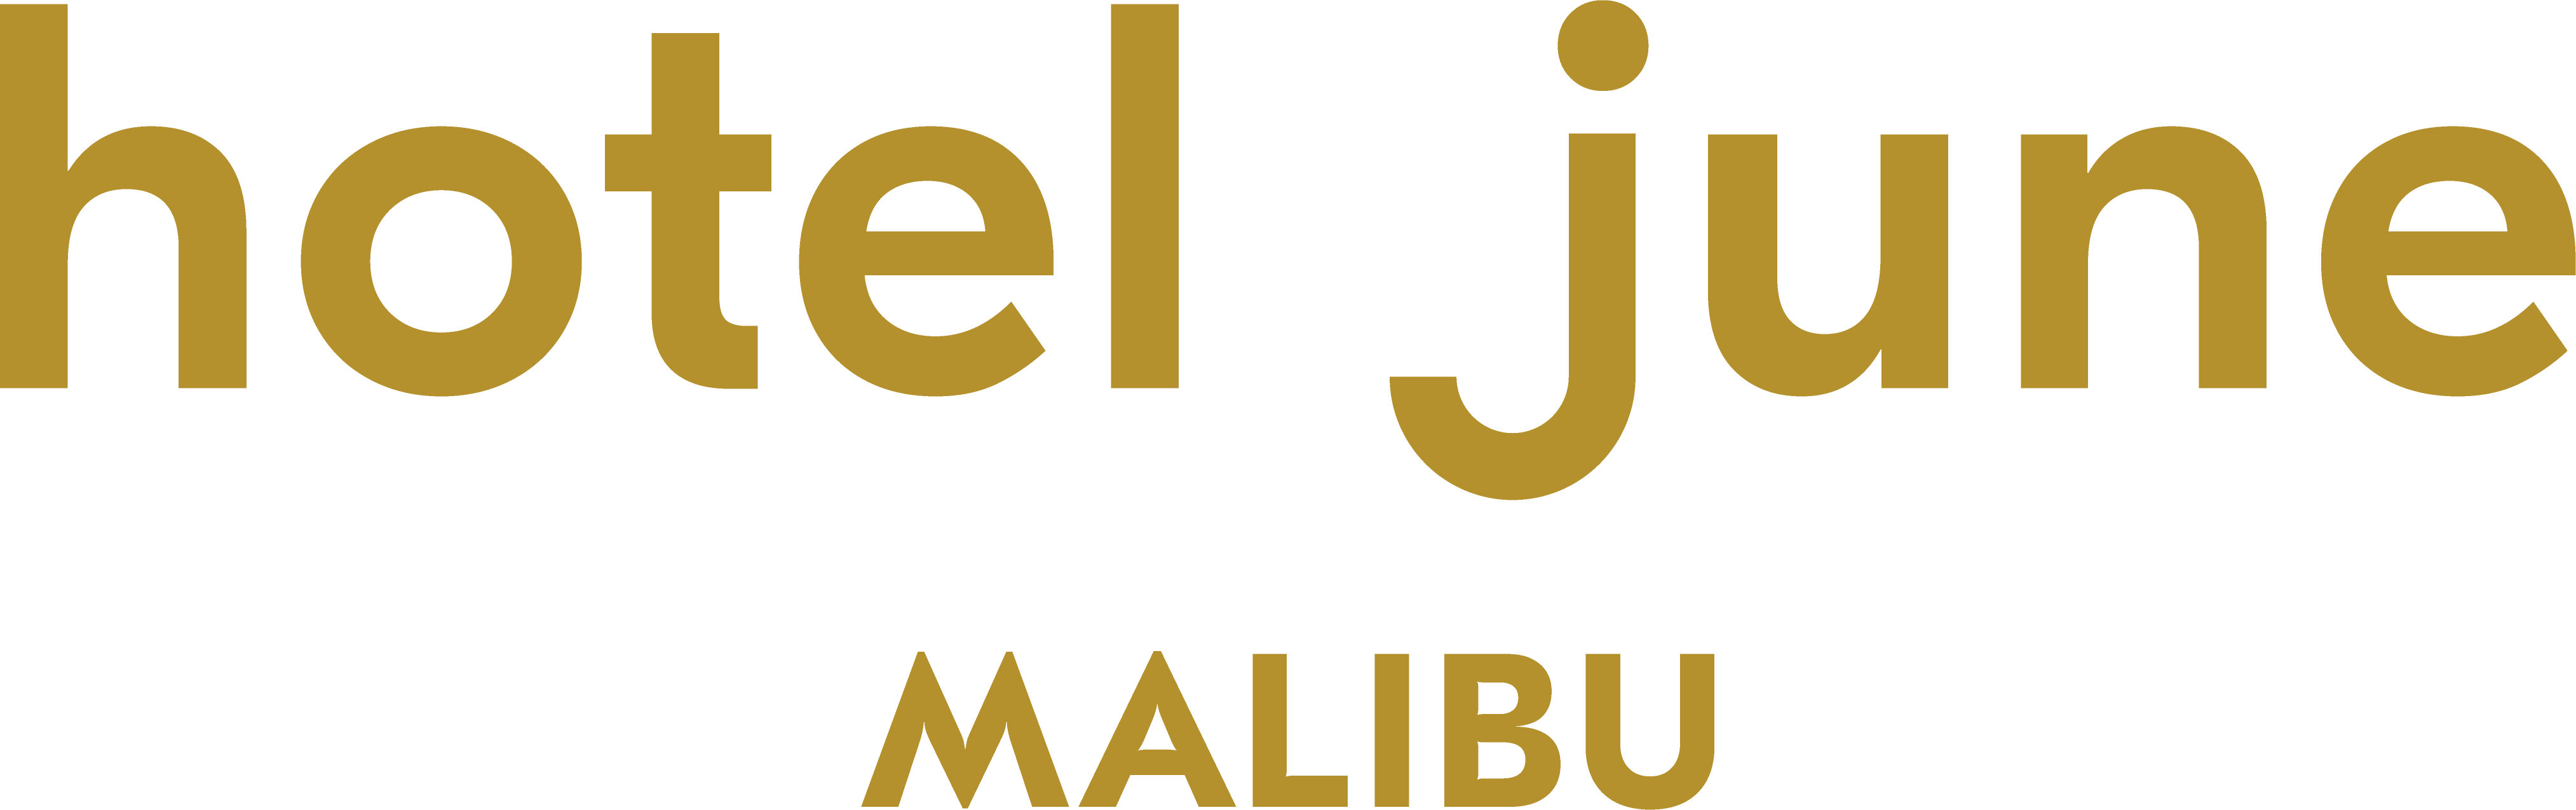 Hotel June malibu Homepage Link